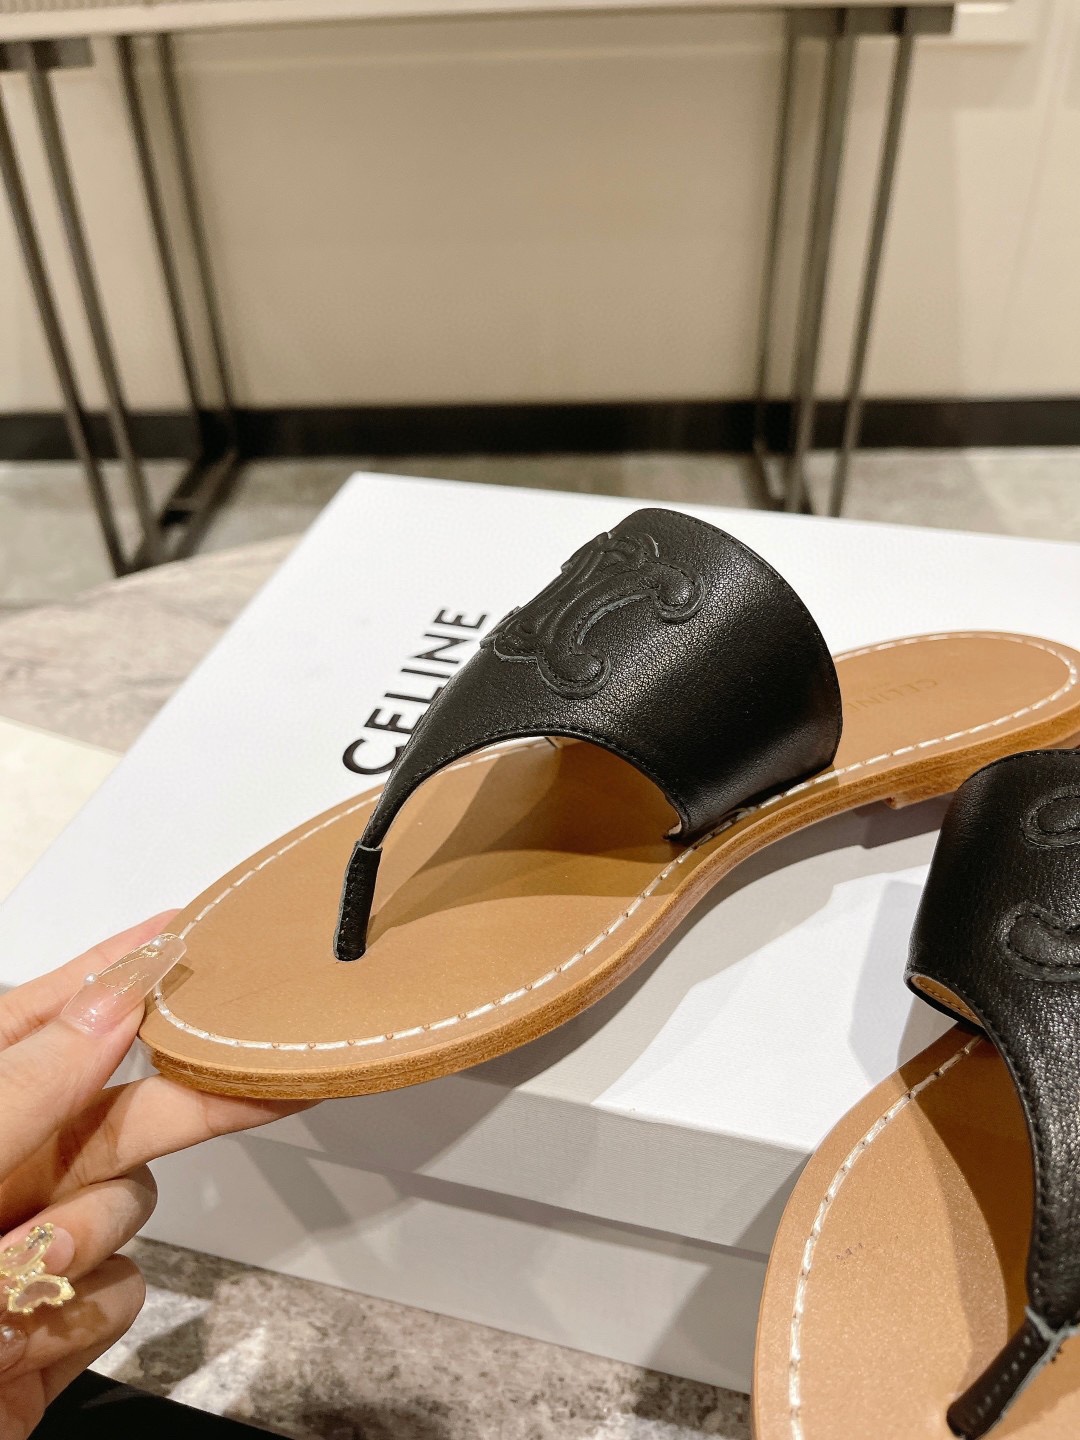 Celine思琳春夏最新款复古时髦凉鞋️夏天搭配袜子简直绝绝子了️复古的点上带上了满分时髦感颜值绝️原版